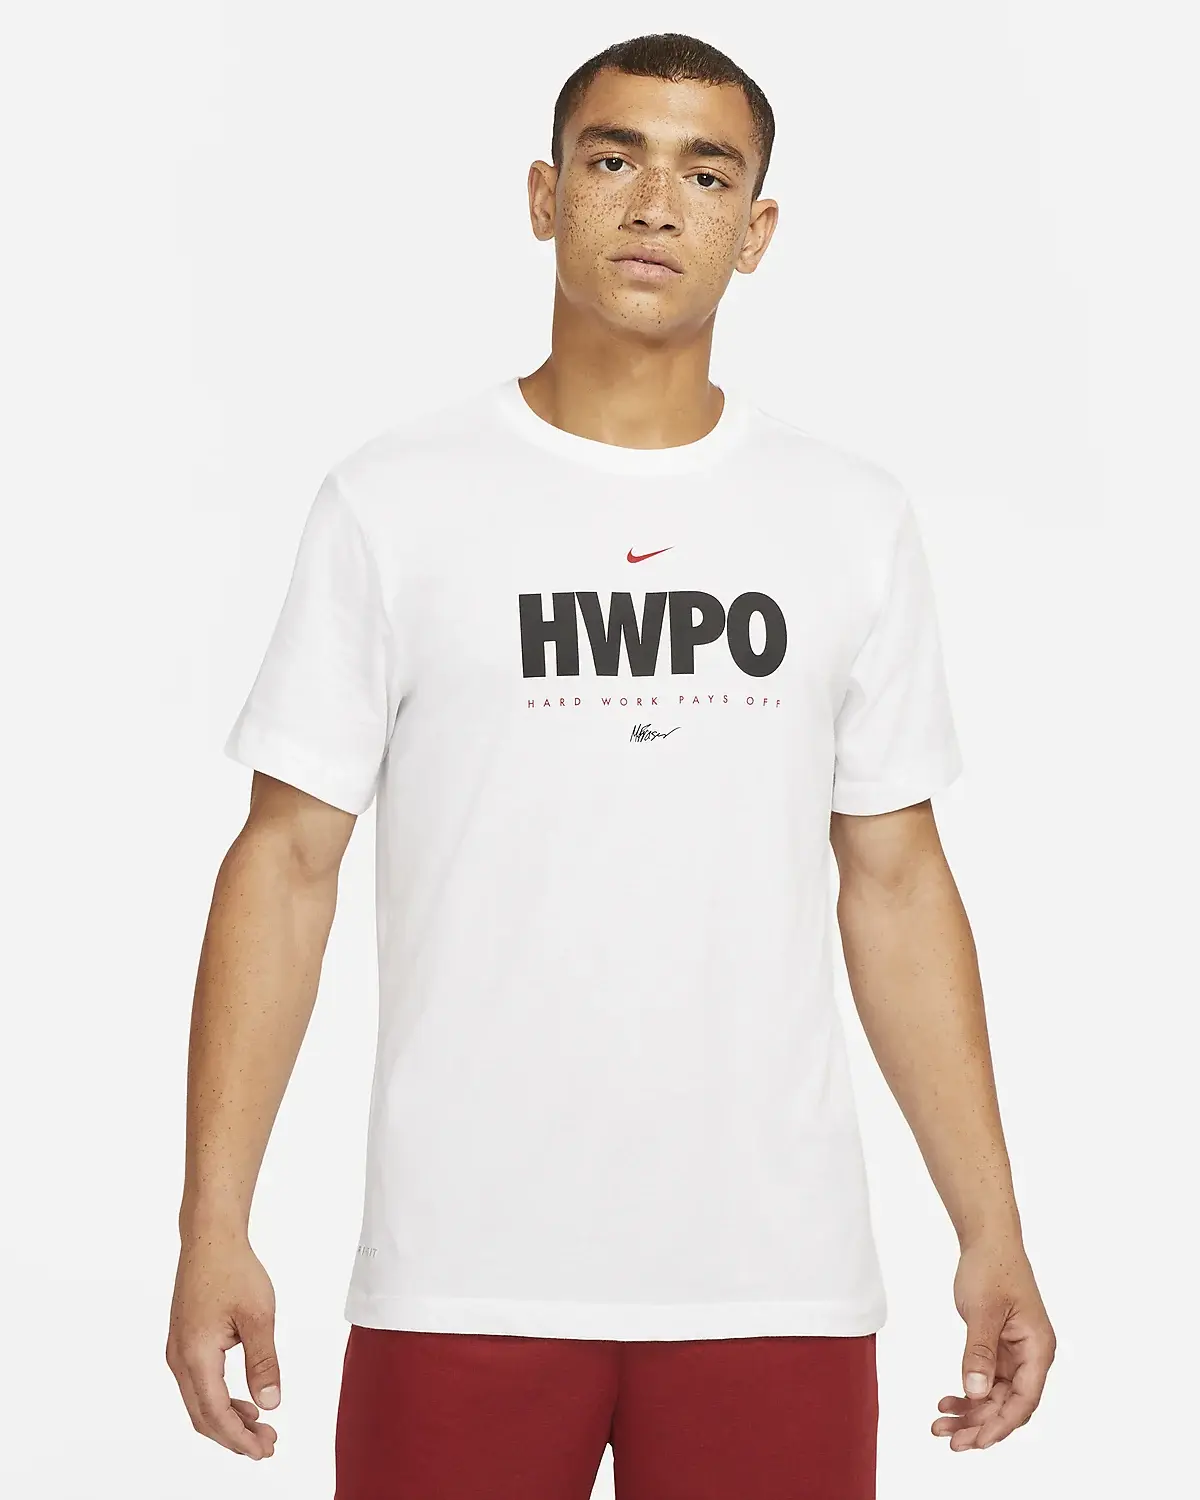 Nike Dri-FIT "HWPO". 1